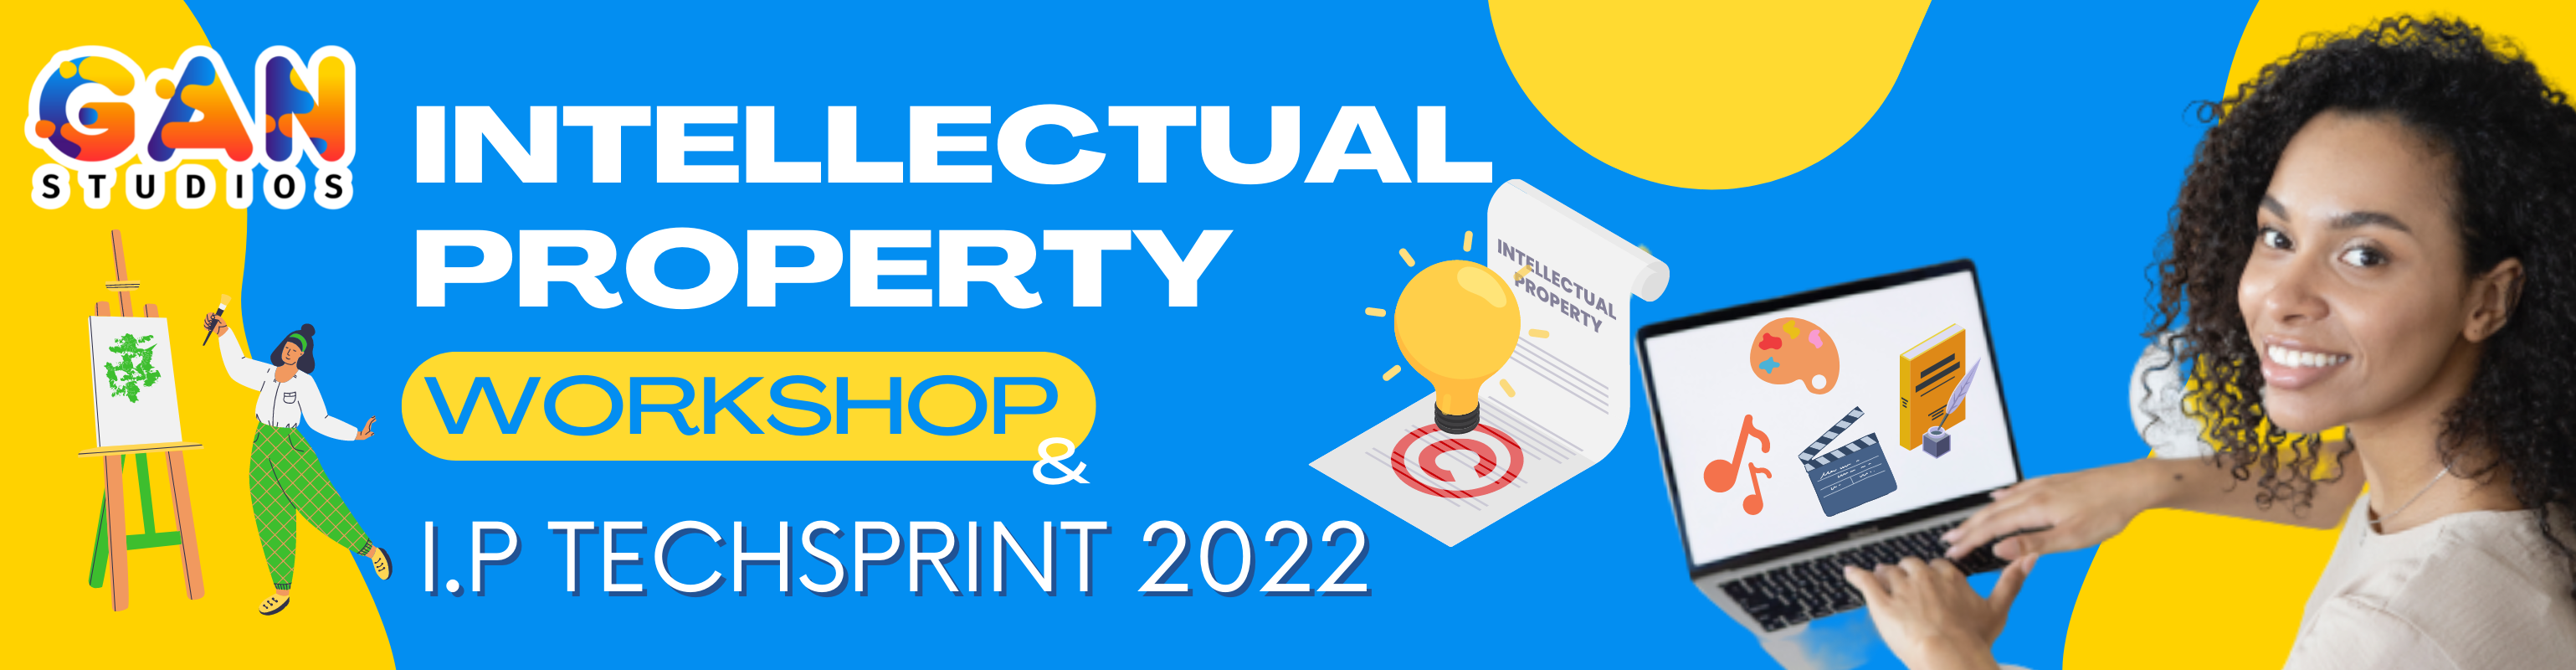 Intellectual Property Workshop & I.P TechSprint Challenge 2022